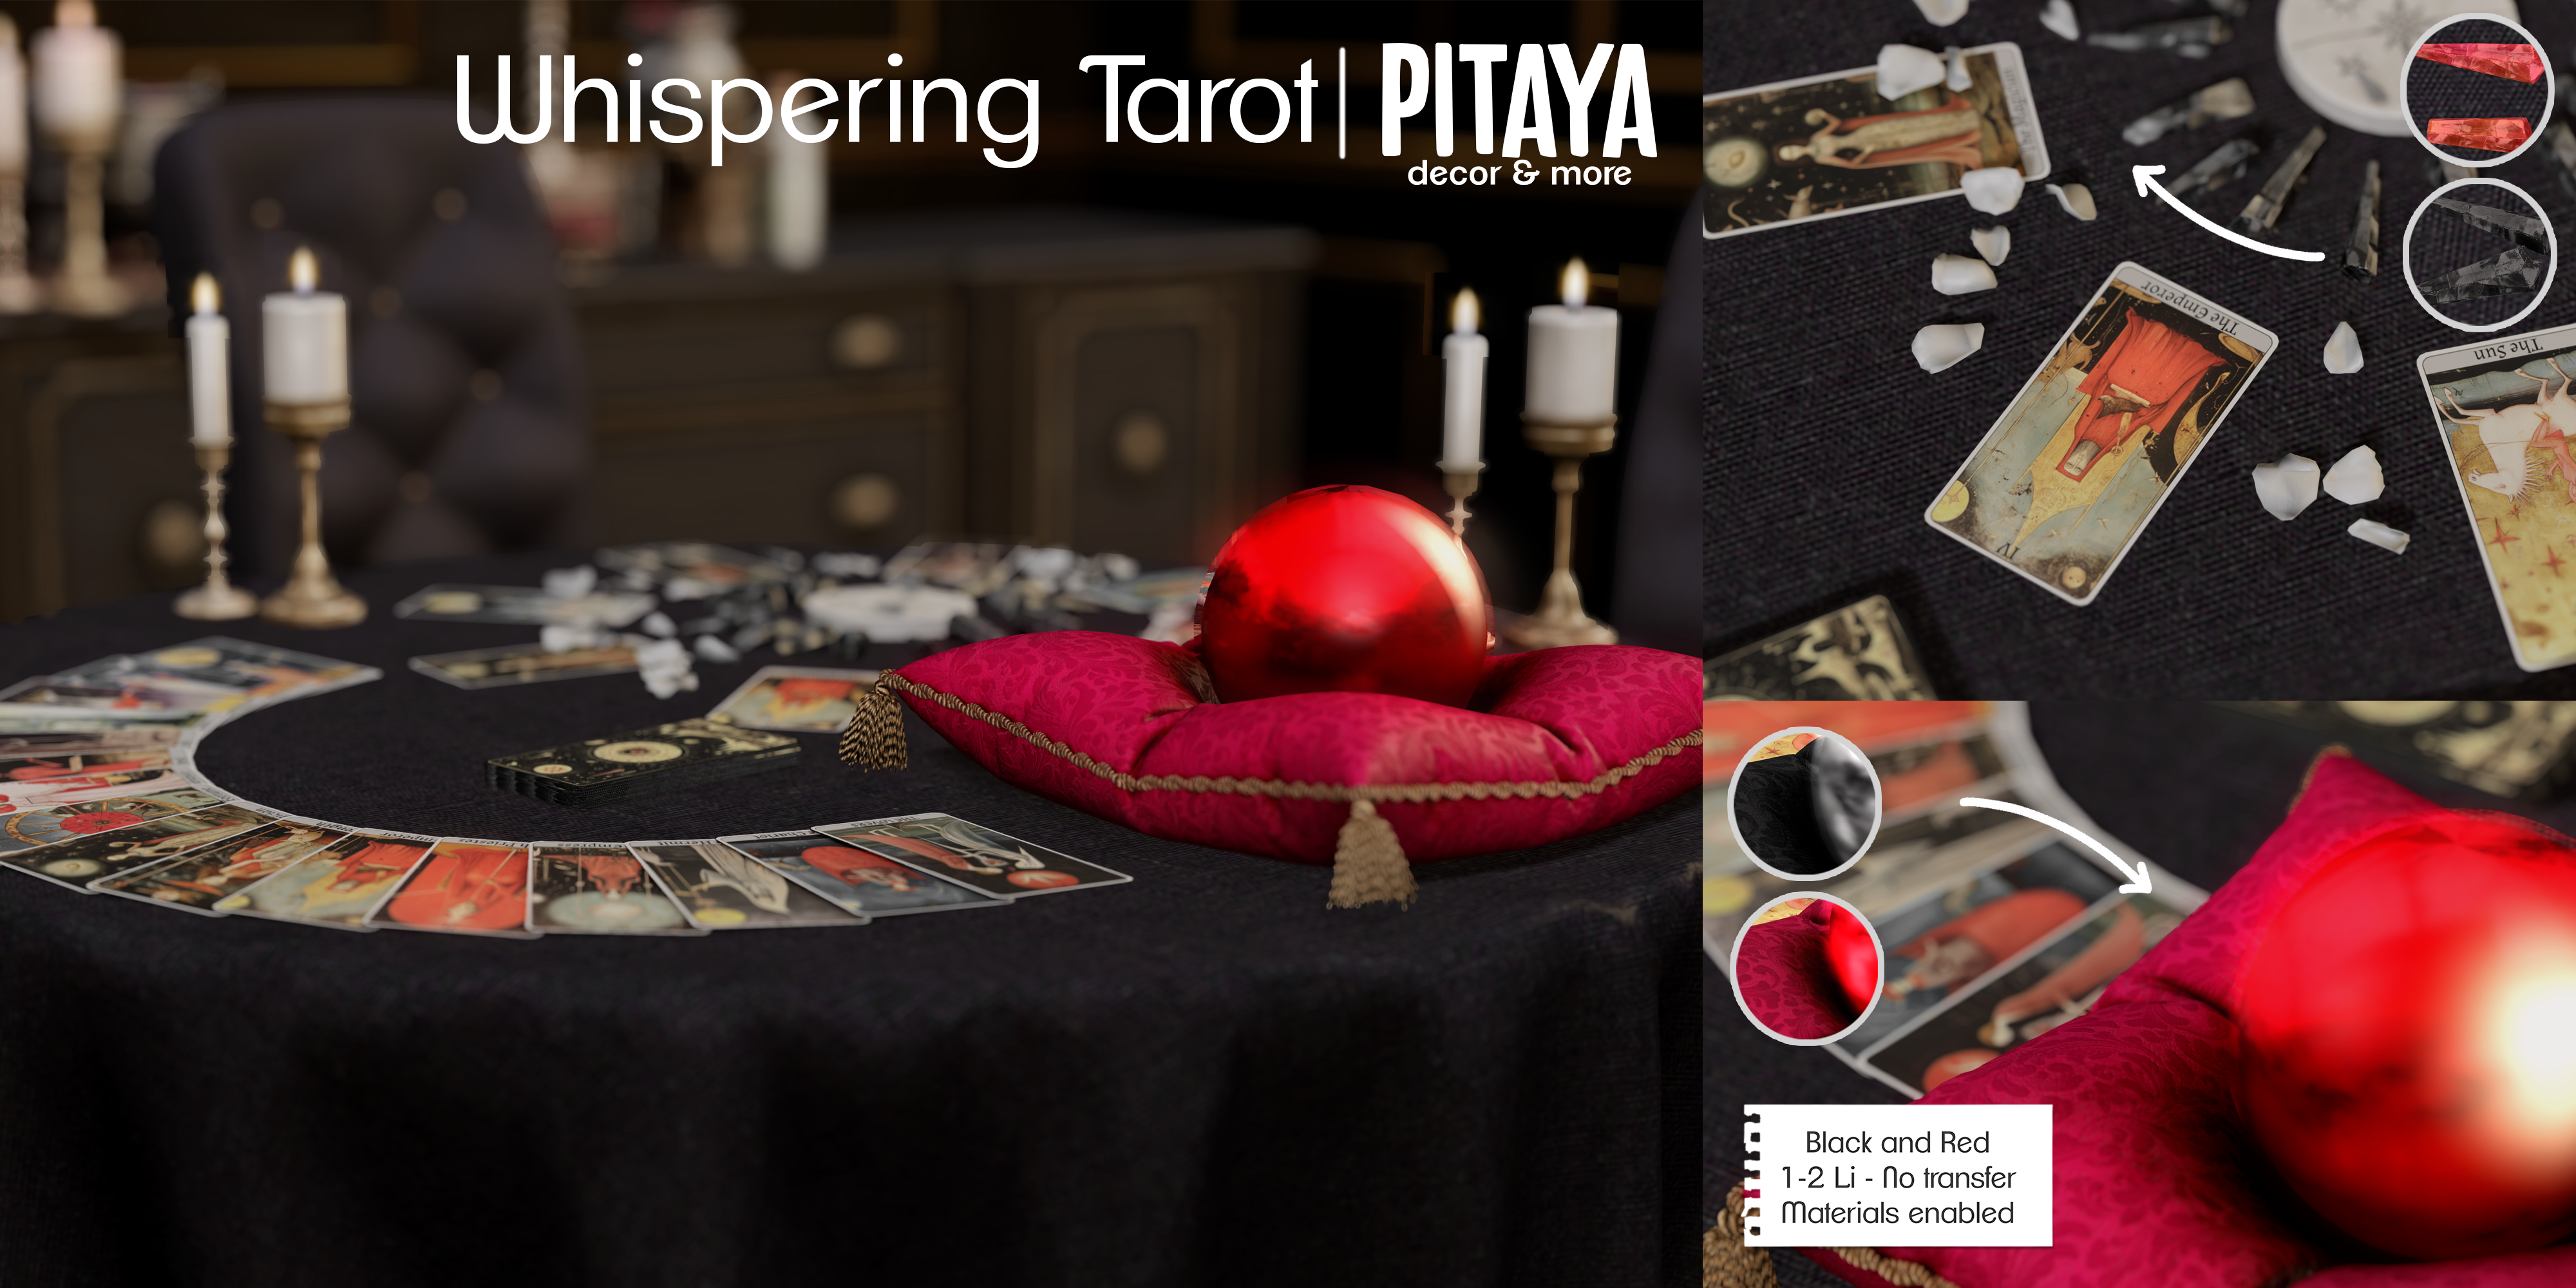 Pitaya – Whispering Tarot